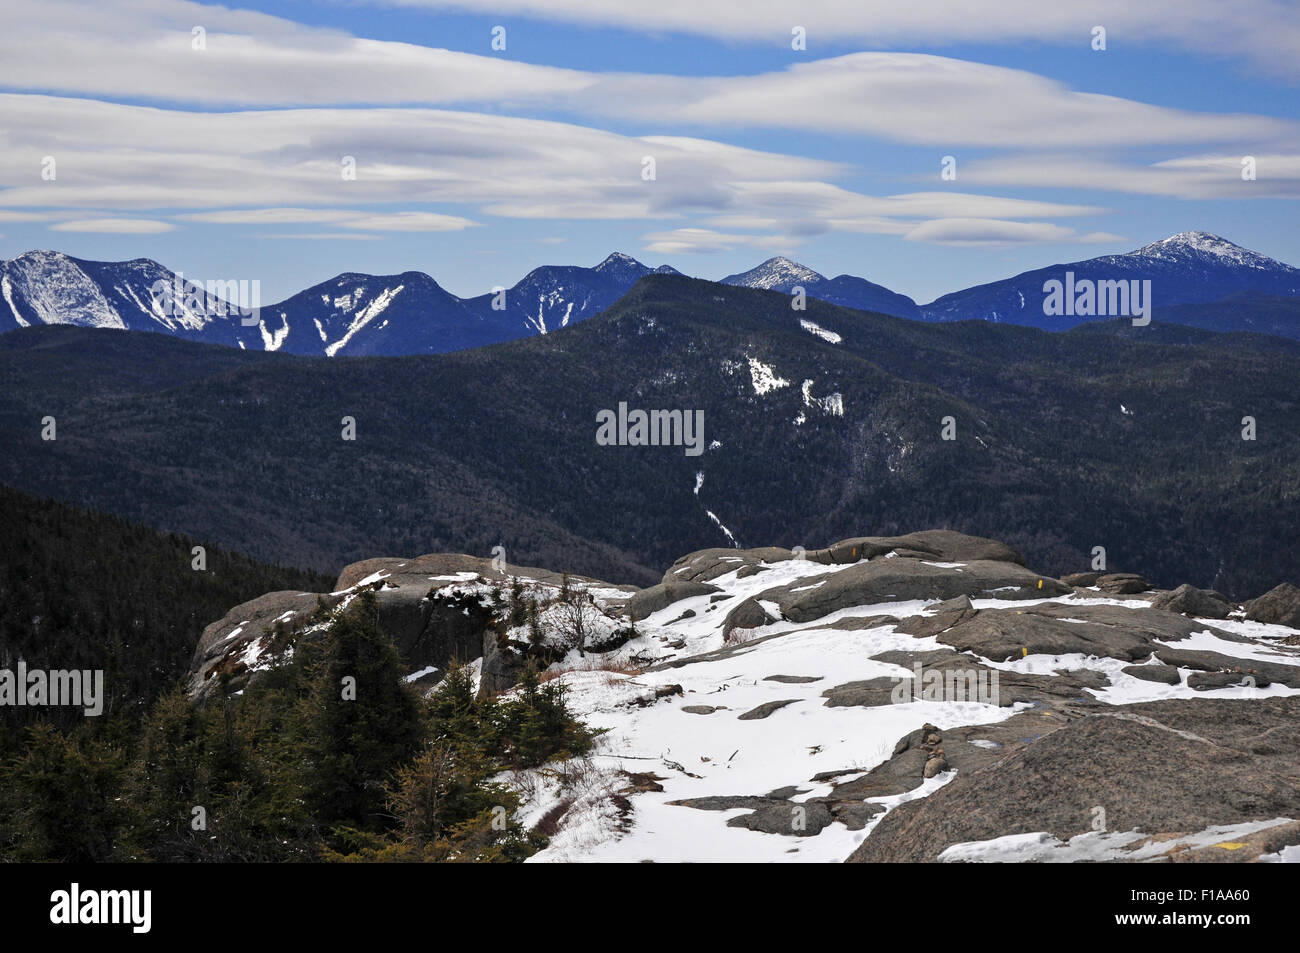 Alpine mountain landscape with snow, Adirondacks, New York State Stock Photo